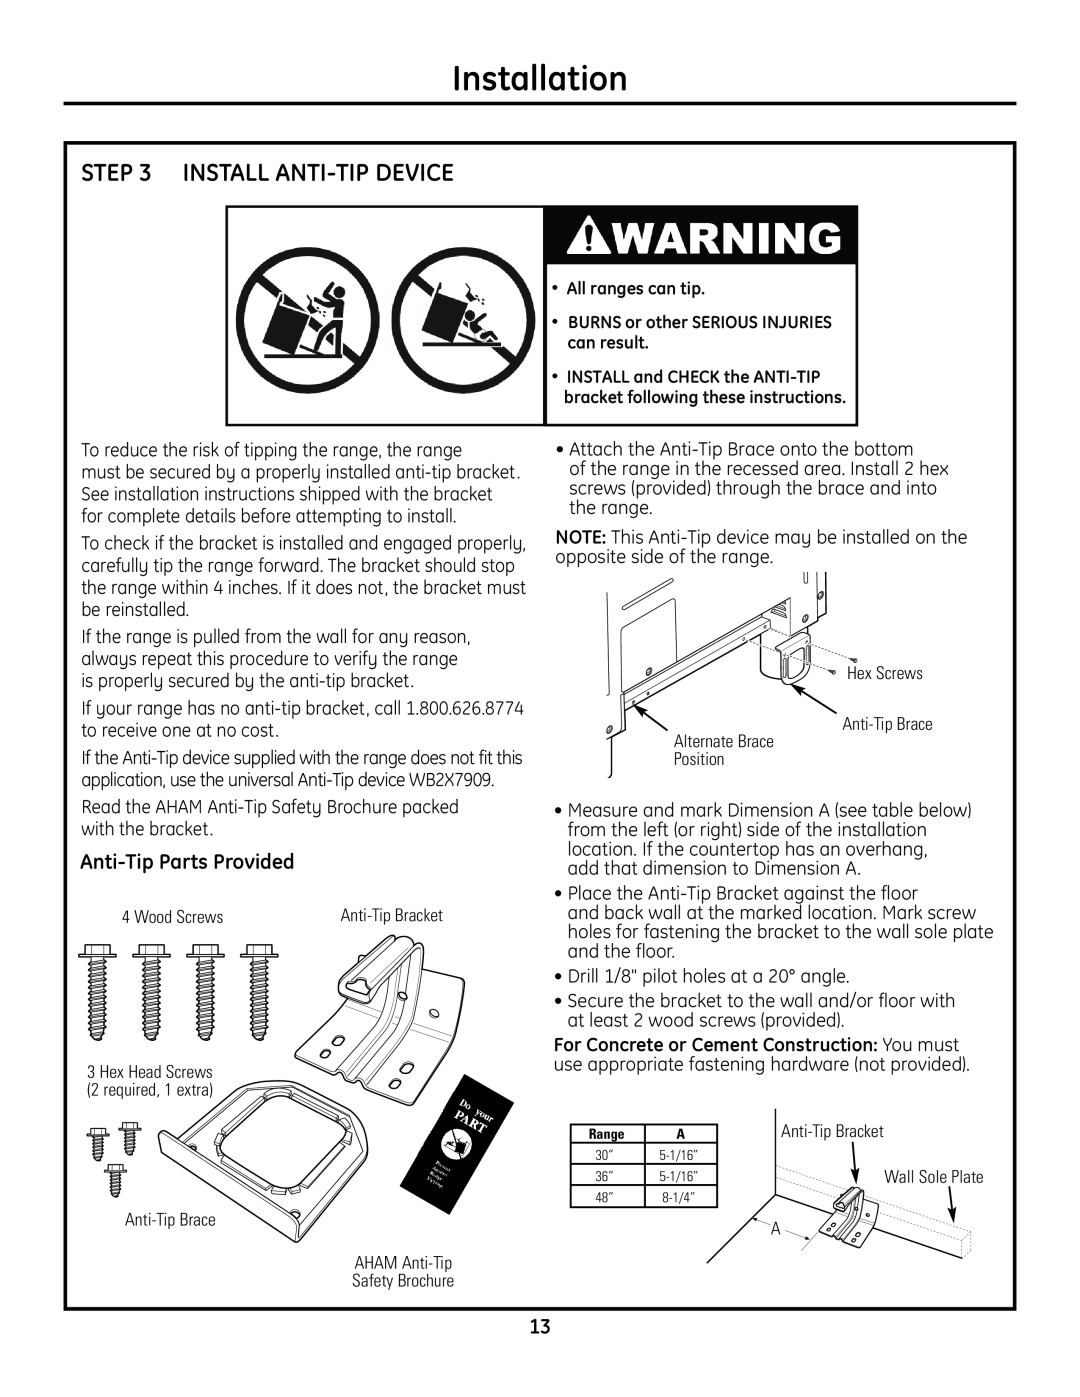 GE Monogram Range installation instructions Installation, Install Anti-Tip Device, Anti-Tip Parts Provided 